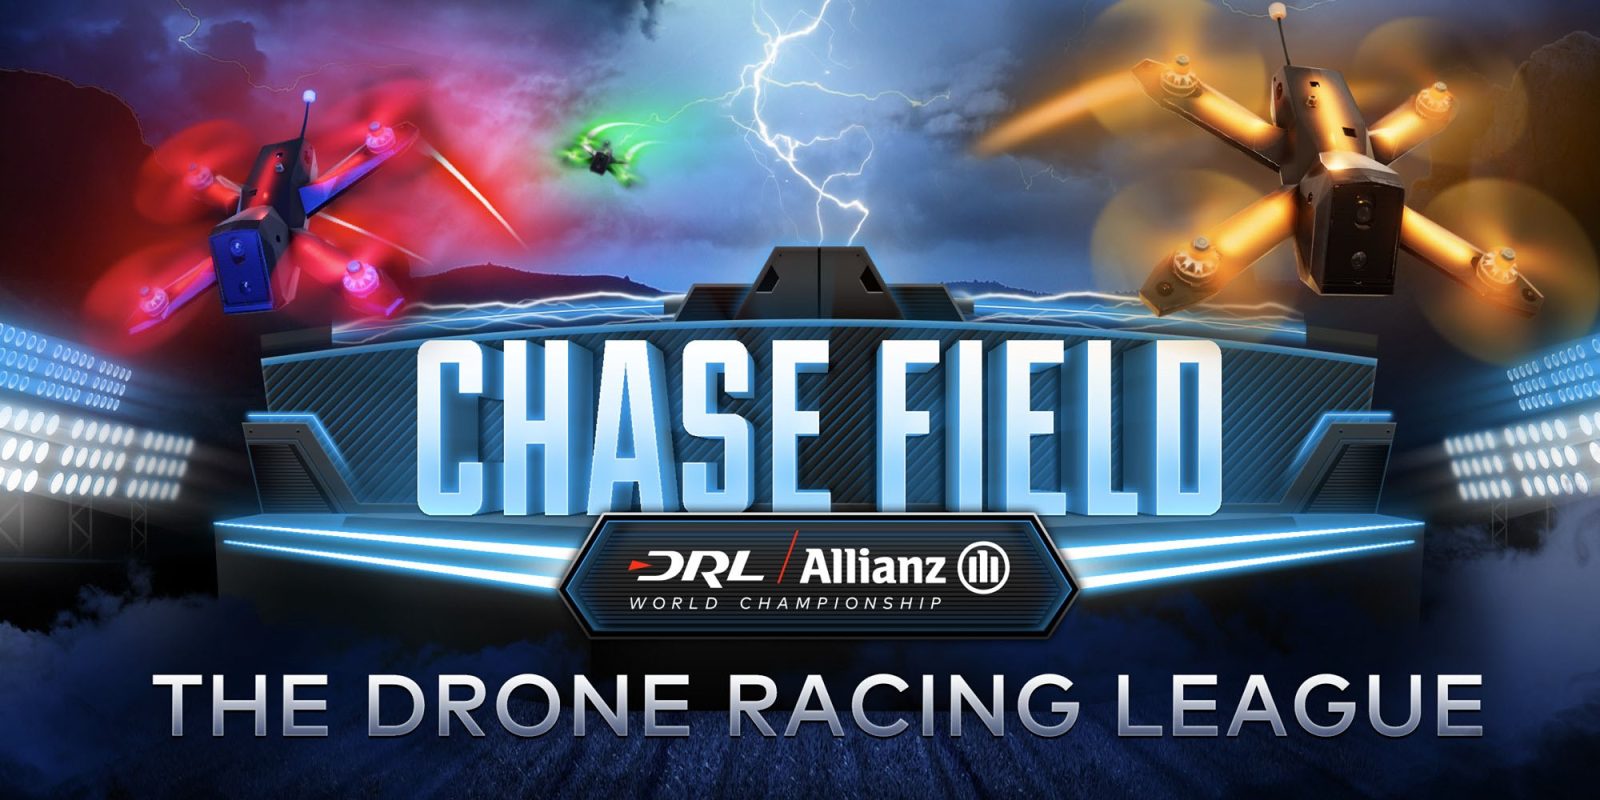 Drone Racing League live race